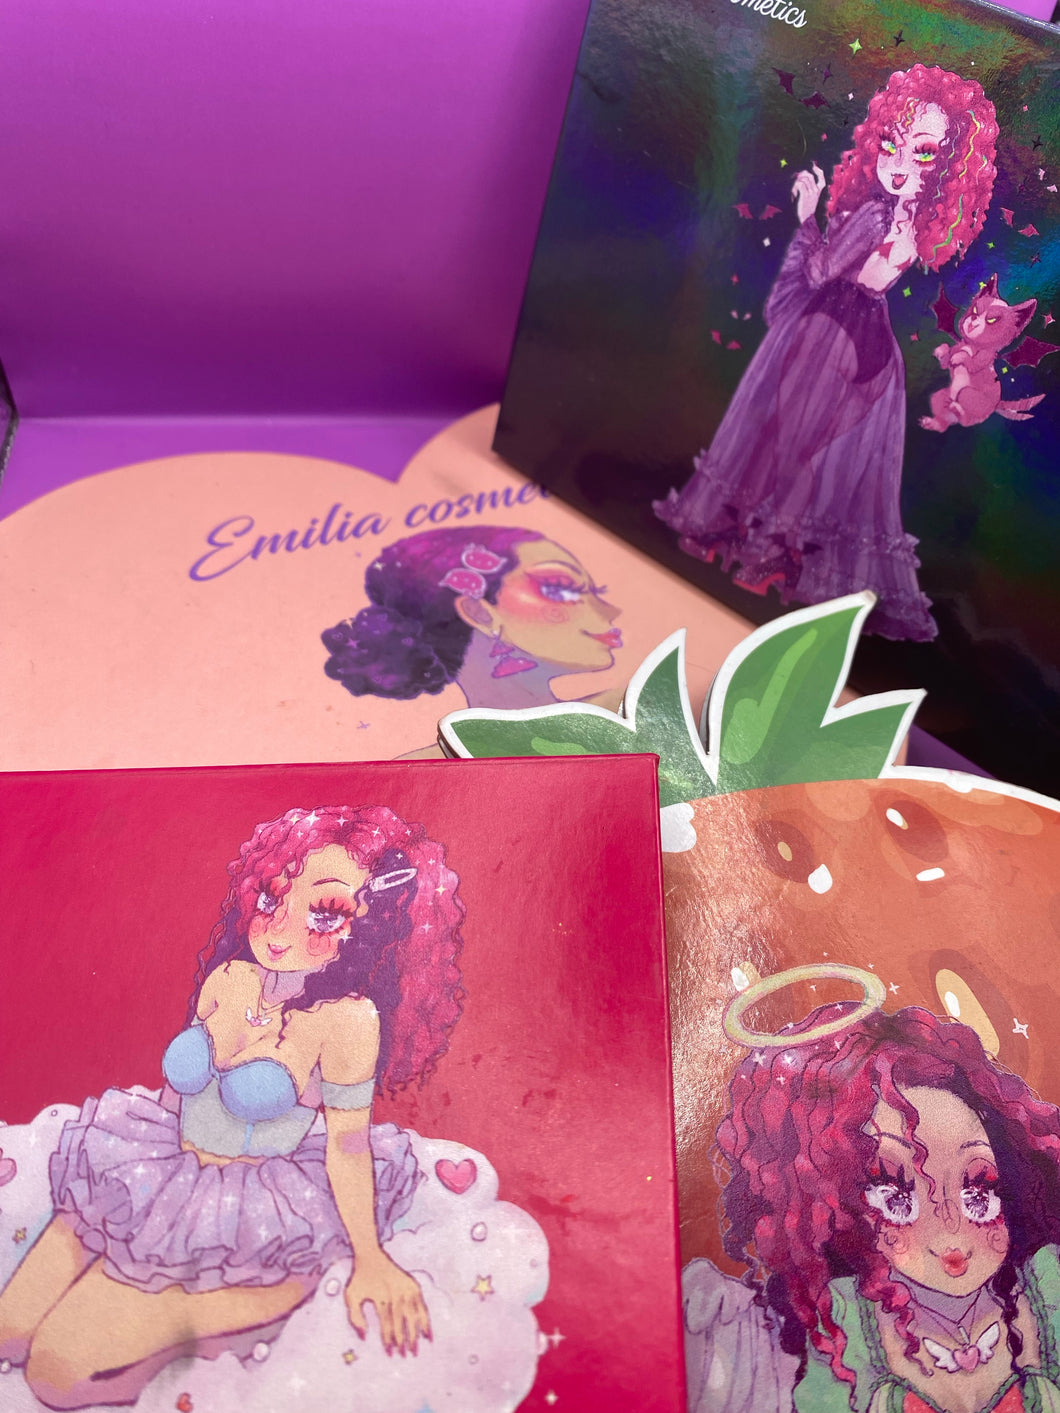 Emilia cosmetics Palette bundle